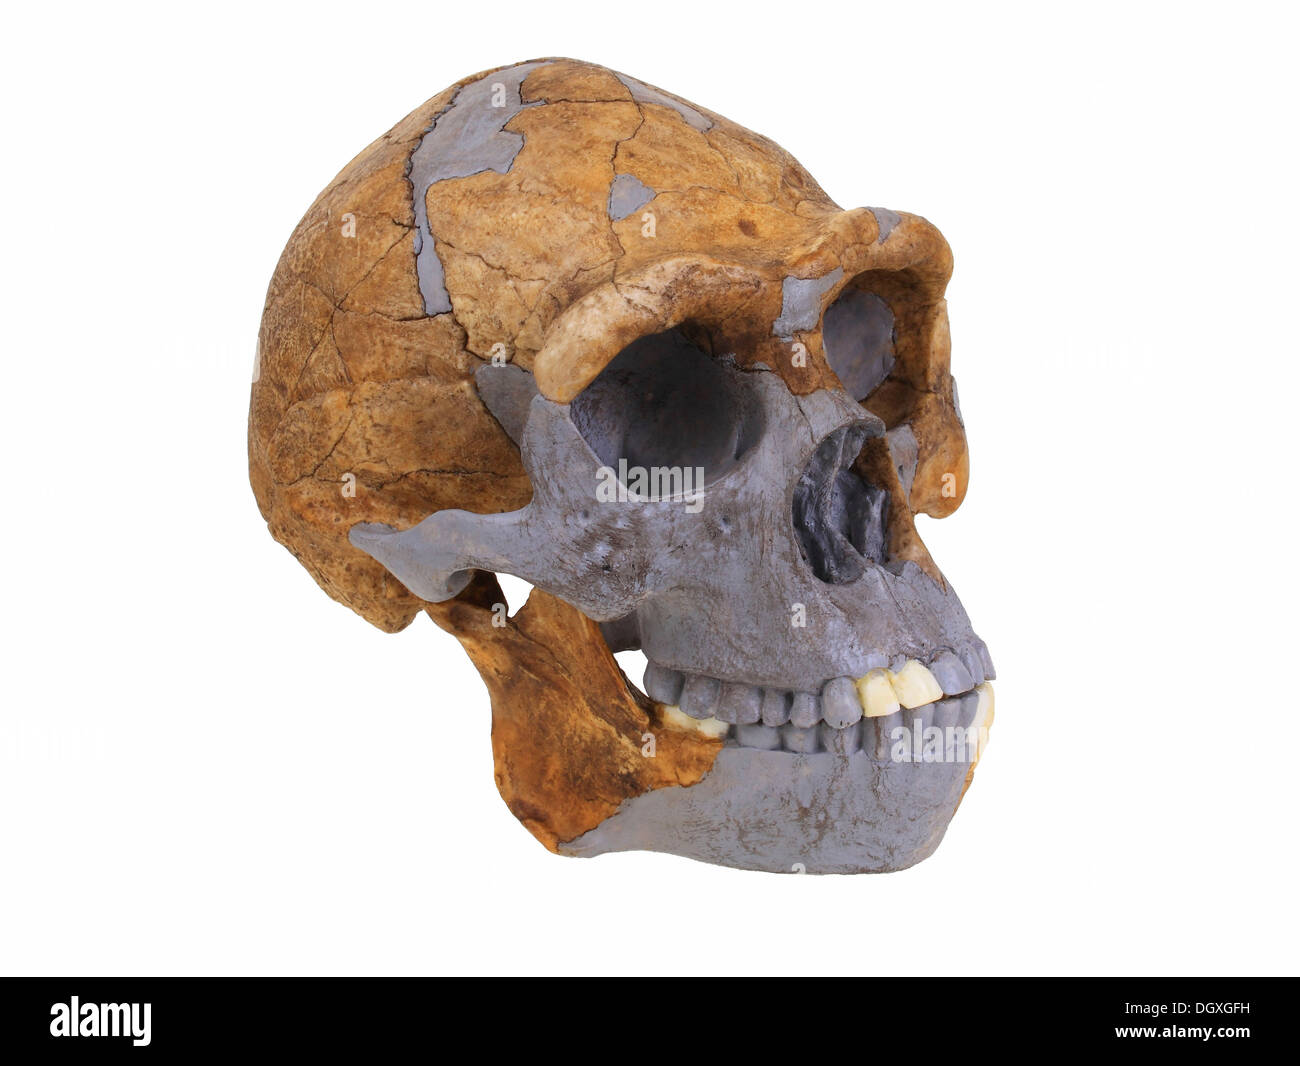 Replica skull of Homo erectus, Peking man, evolution of human species Stock Photo